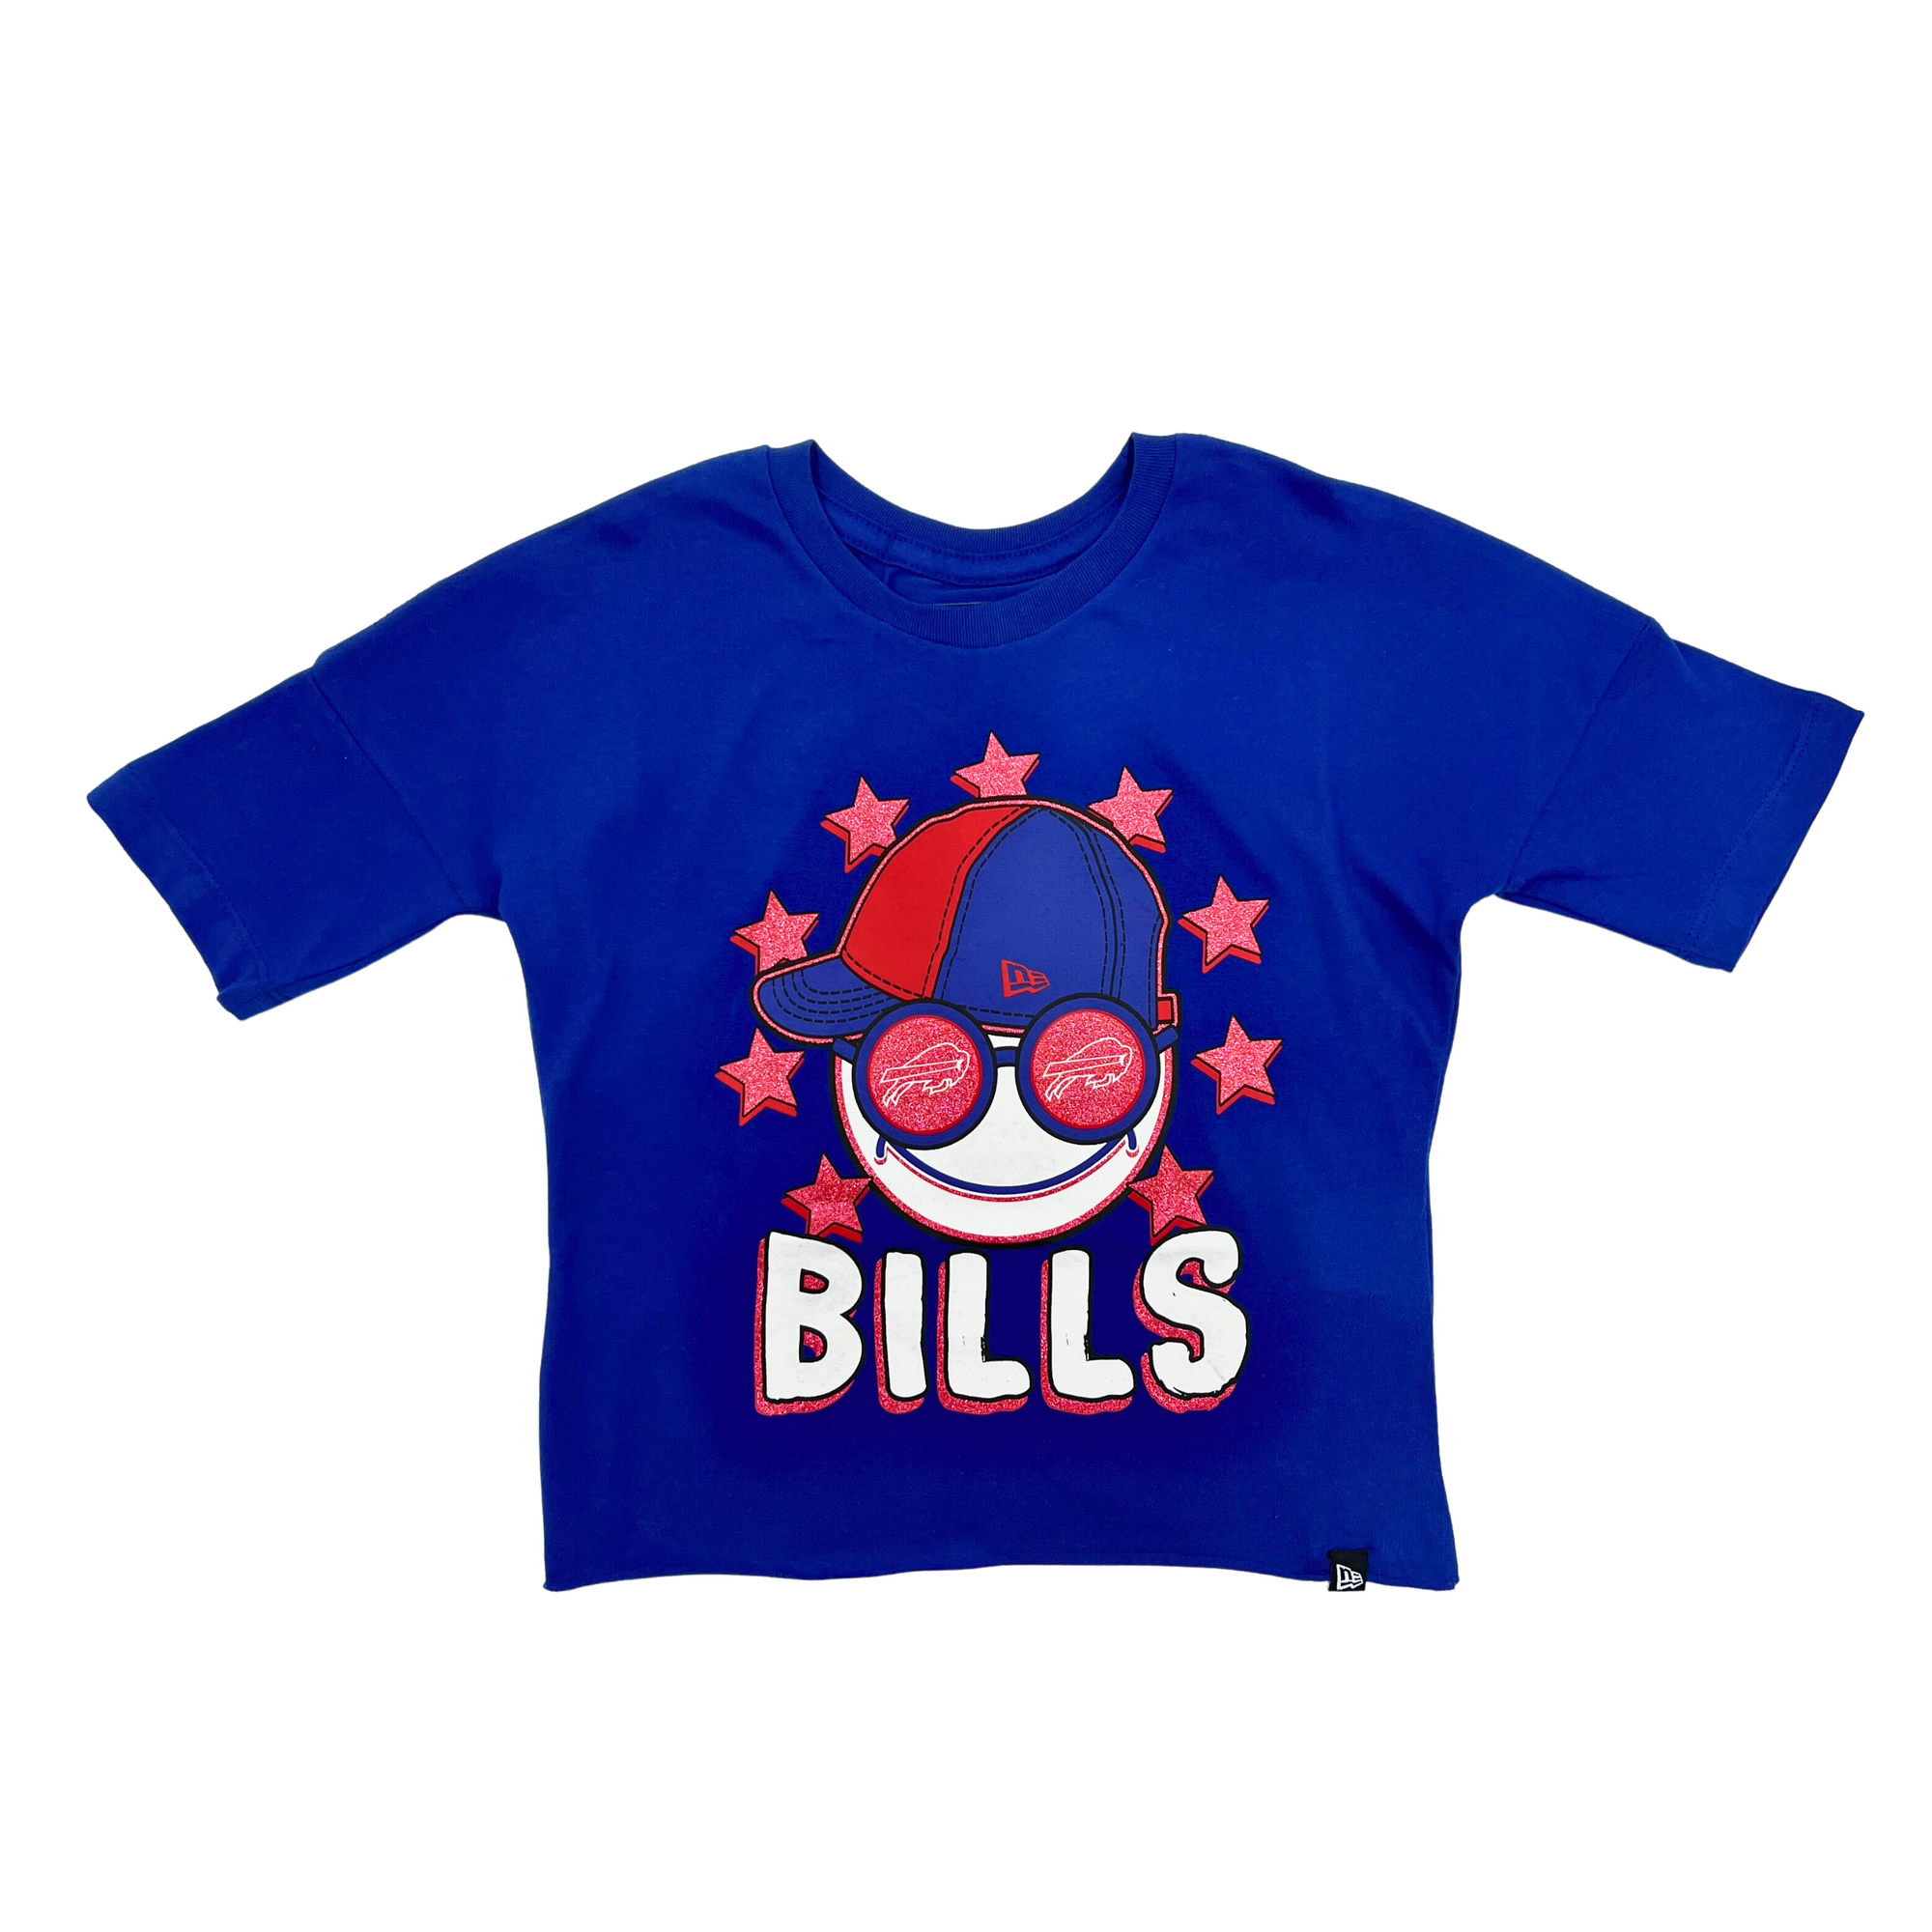 Shop The Top Buffalo Bills Kids Clothes